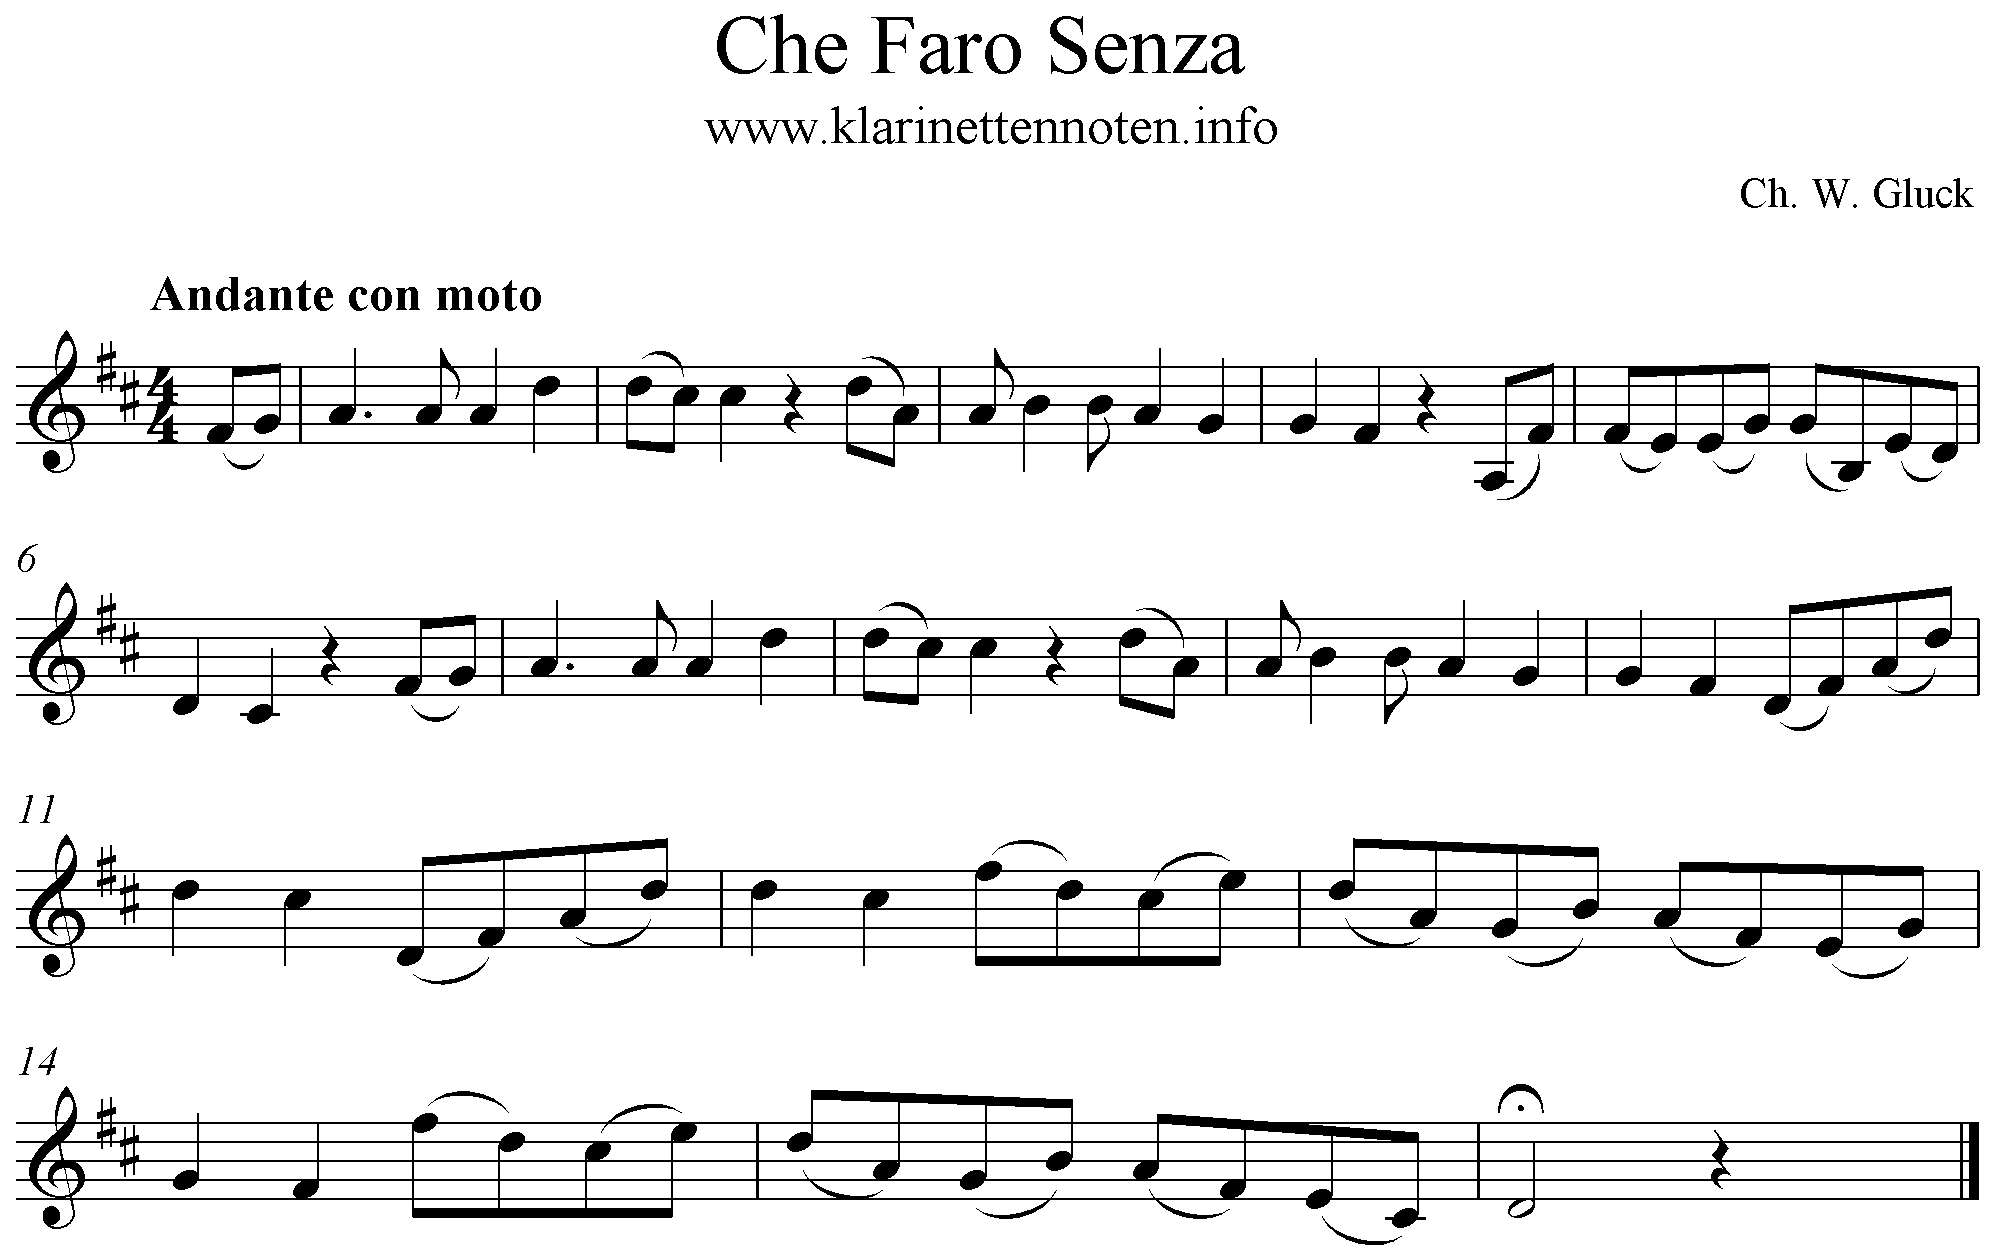 Che Faro Senzs, Orfeo ed euridice, Gluck, D-Major, KLarinette, Clarinet